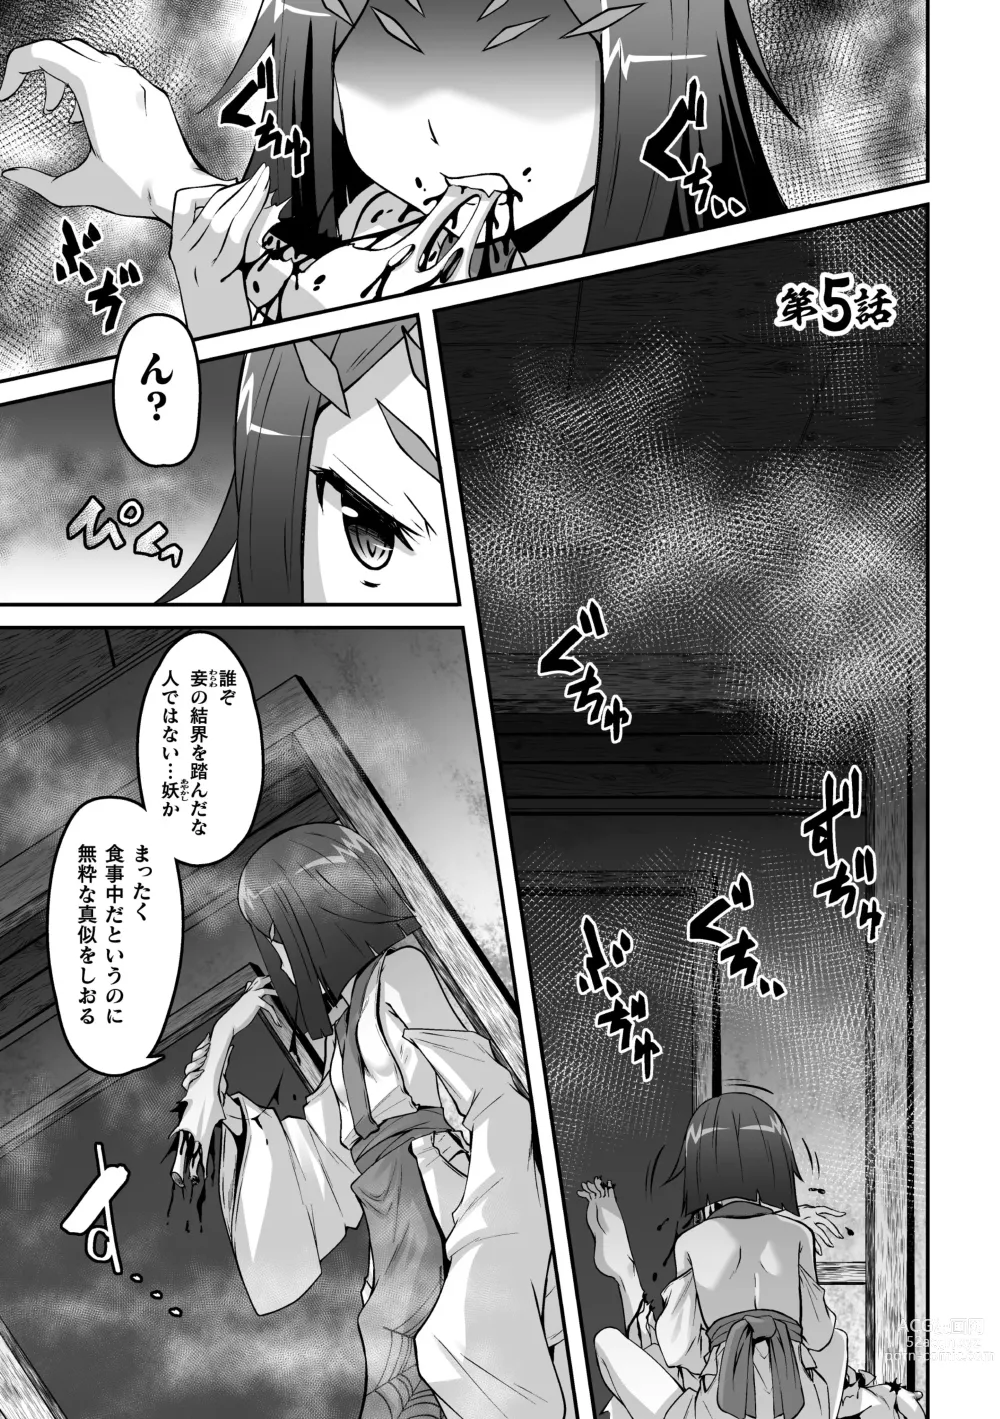 Page 3 of manga Youko Inmon Kitan 5